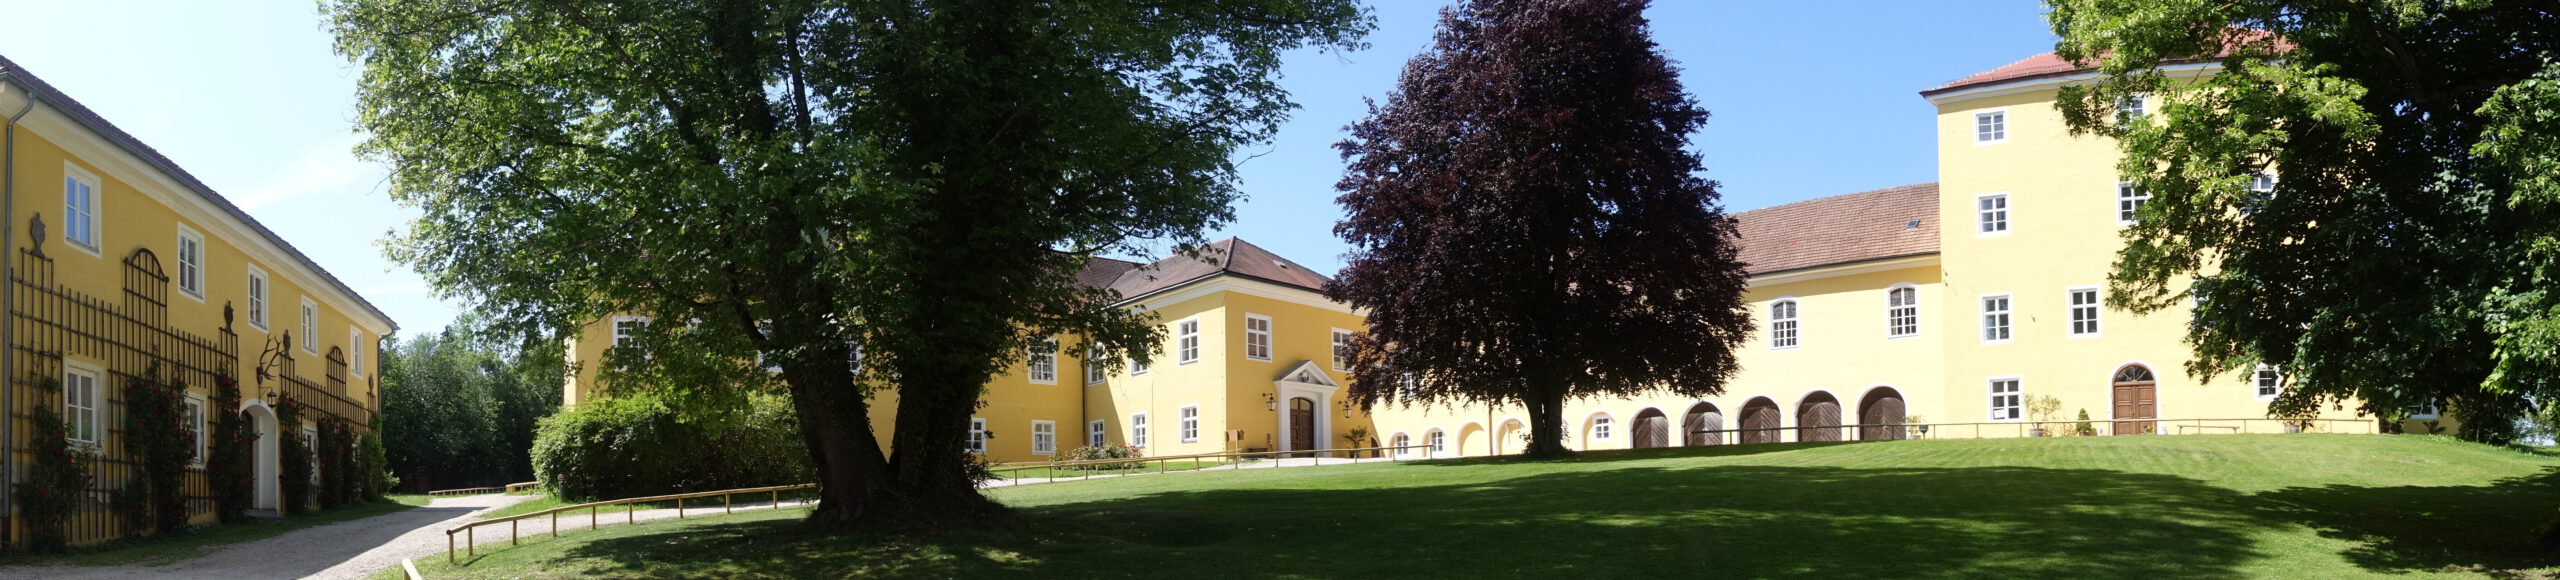 Schloss Jetzendorf